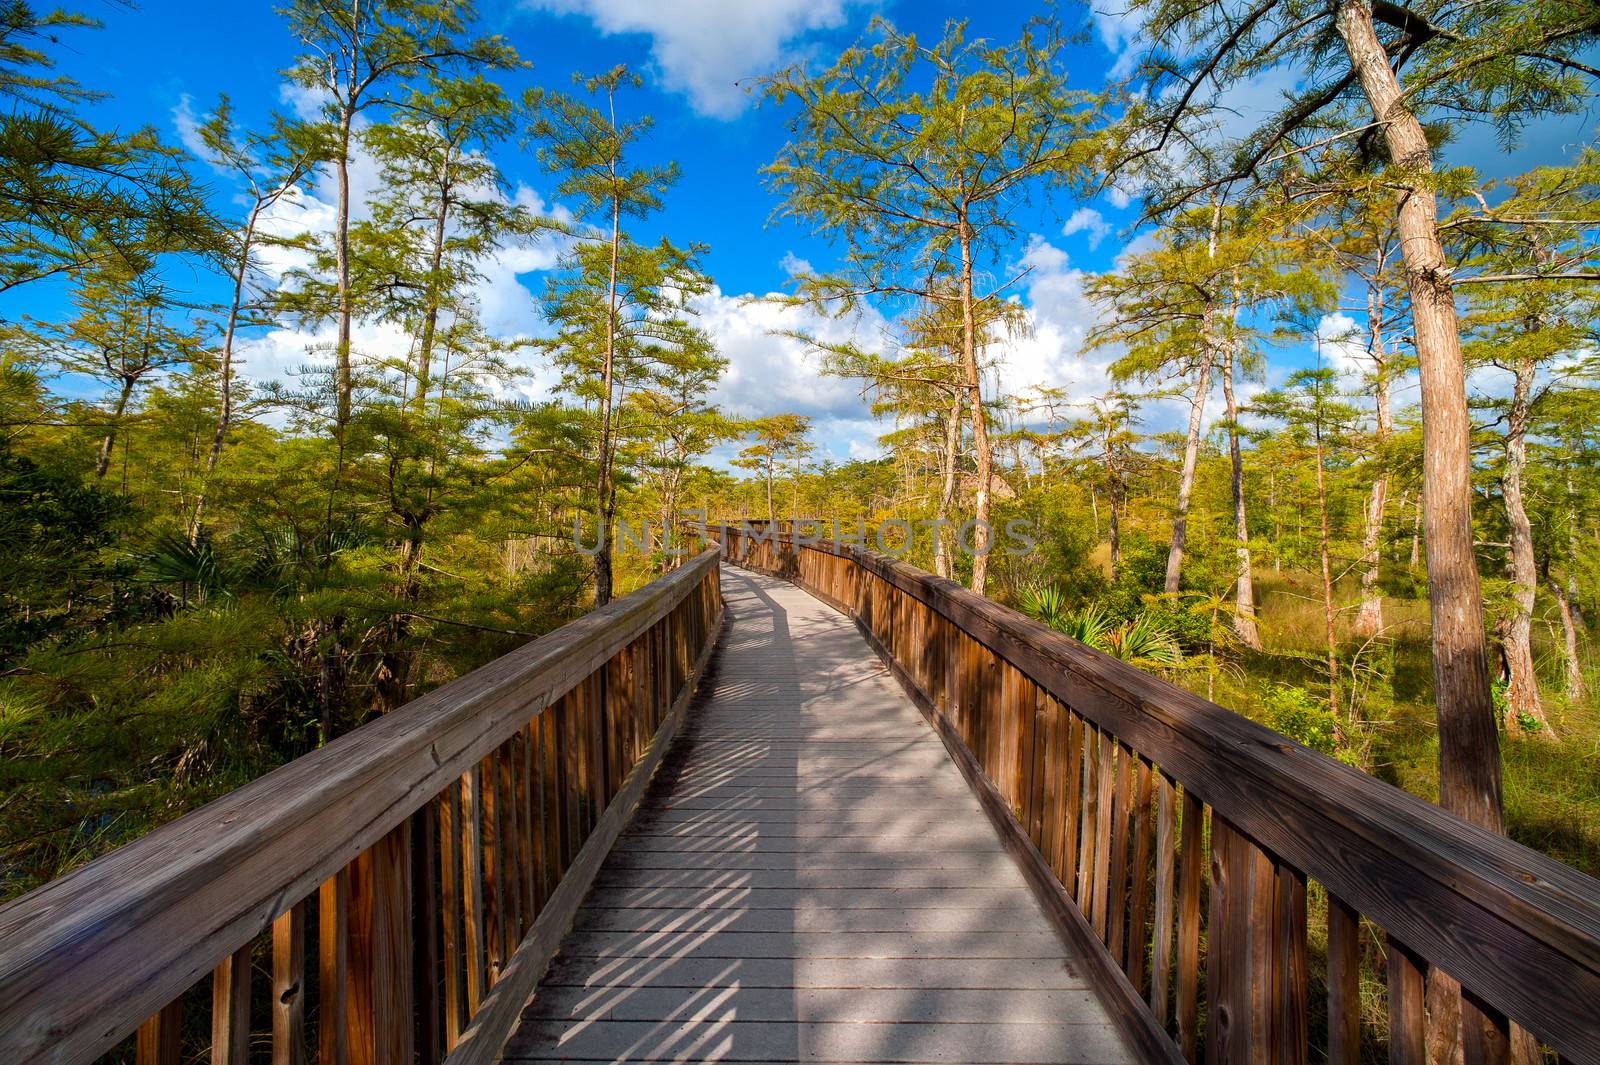 Wooden bridge in a forest, Kirby Storter Roadside Park, Ochopee, Collier County, Florida, USA